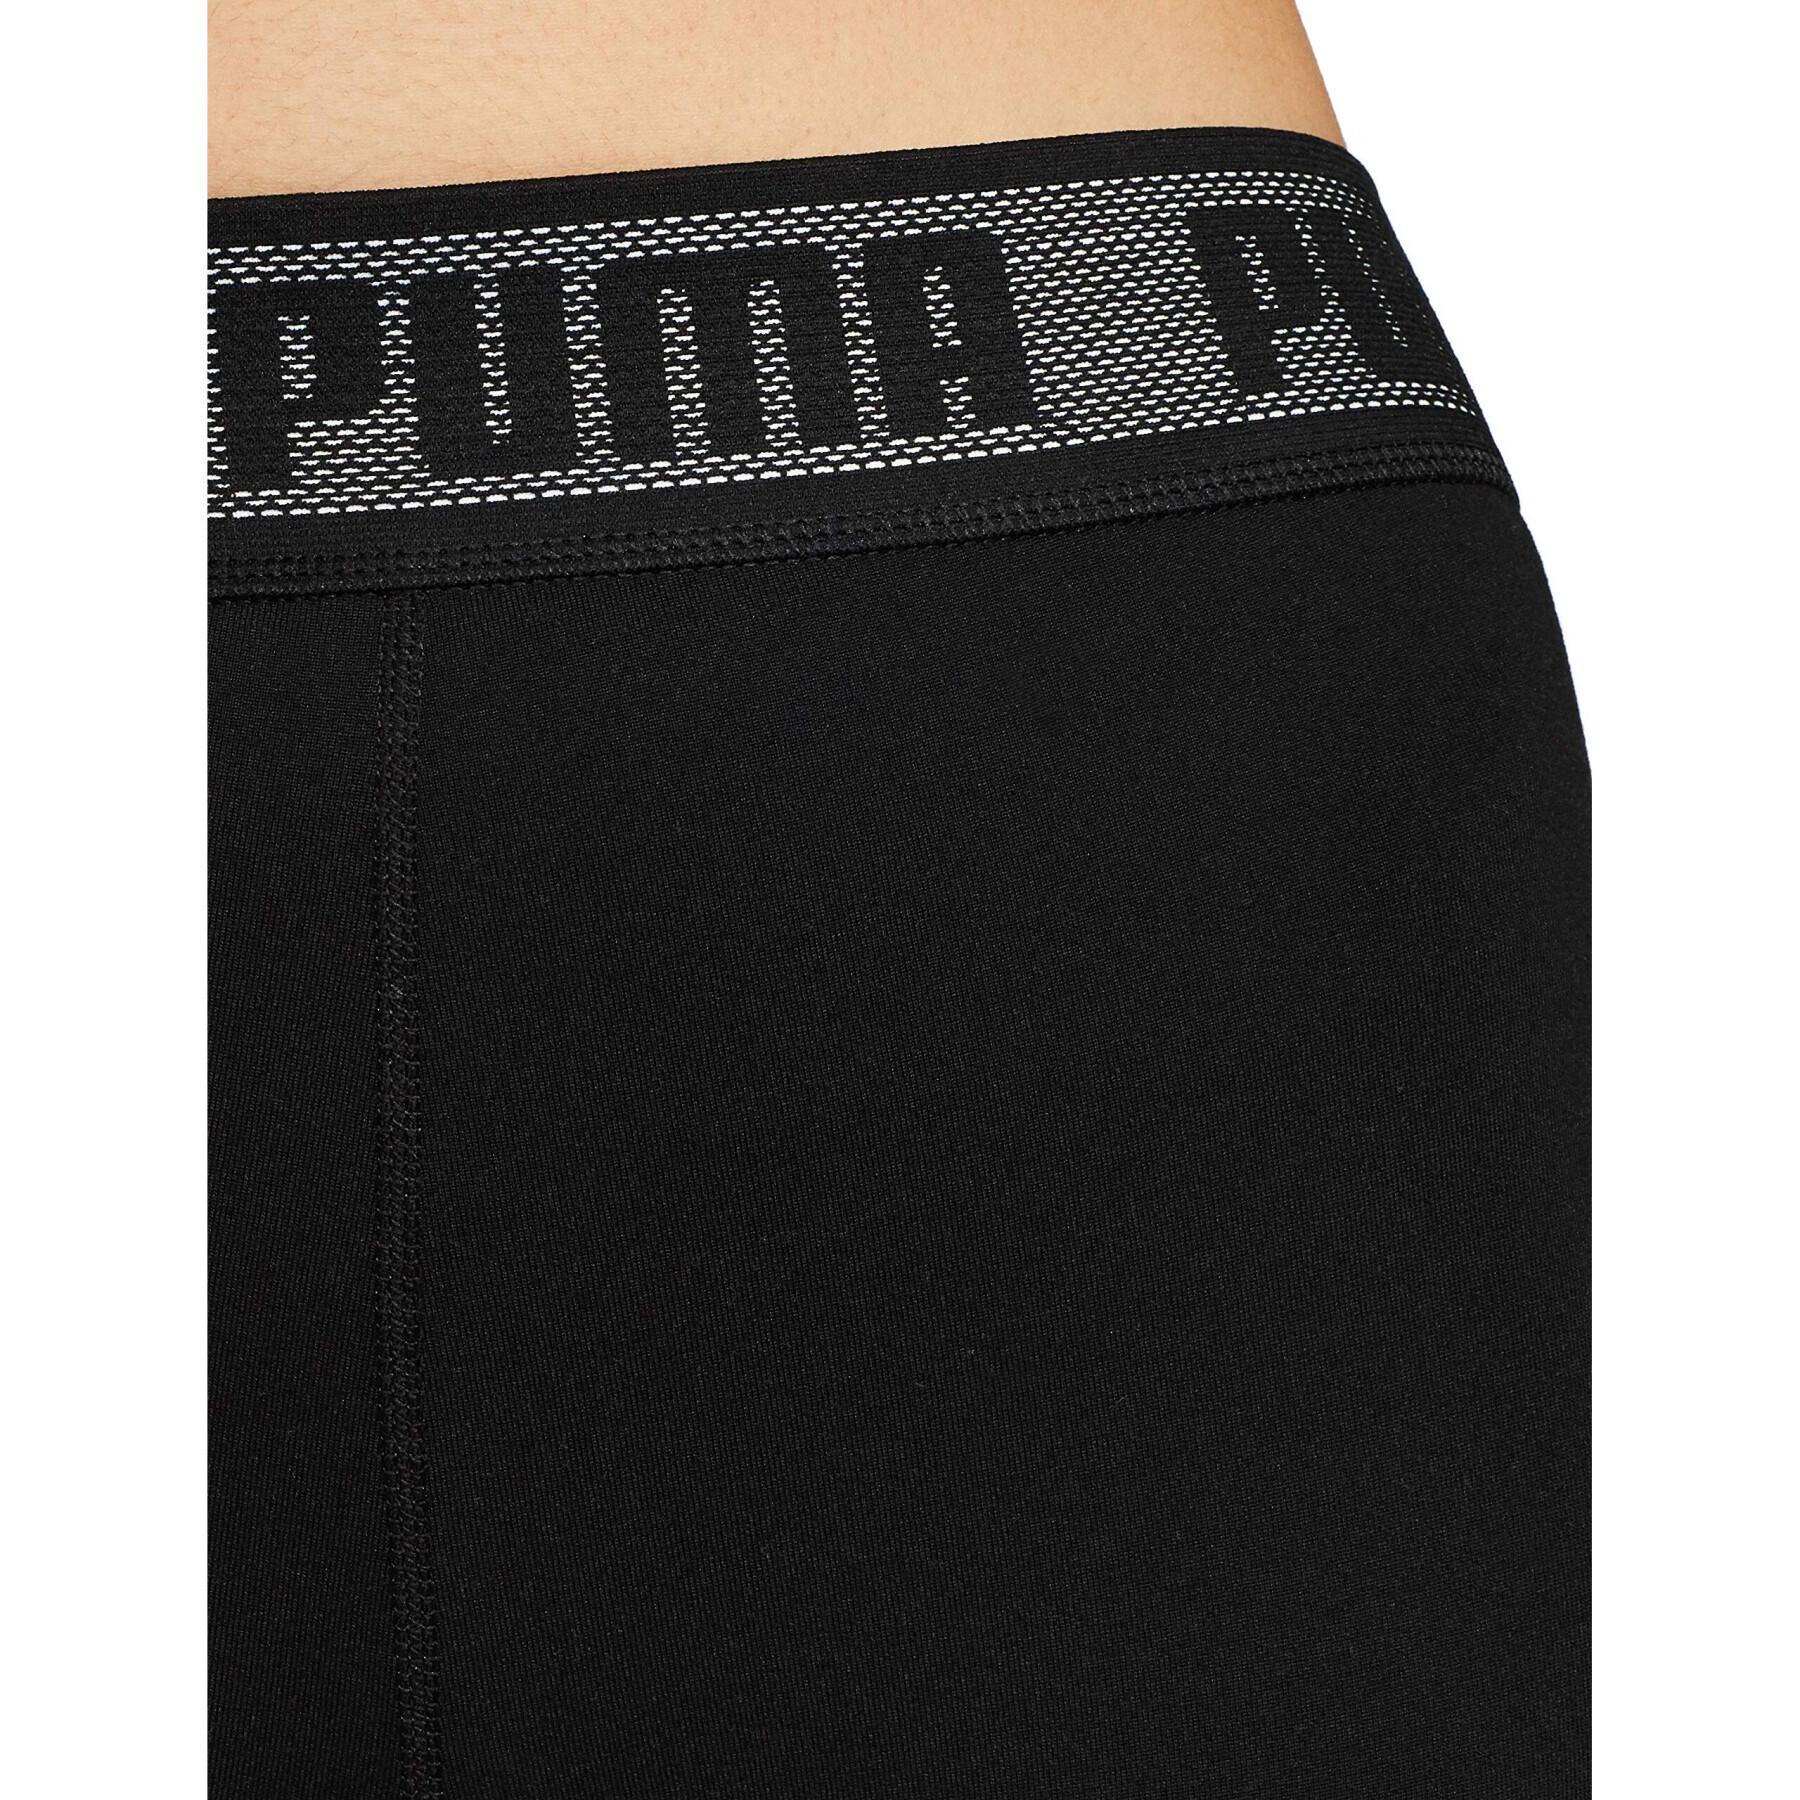 Pantalon femme Puma 3/4 tight